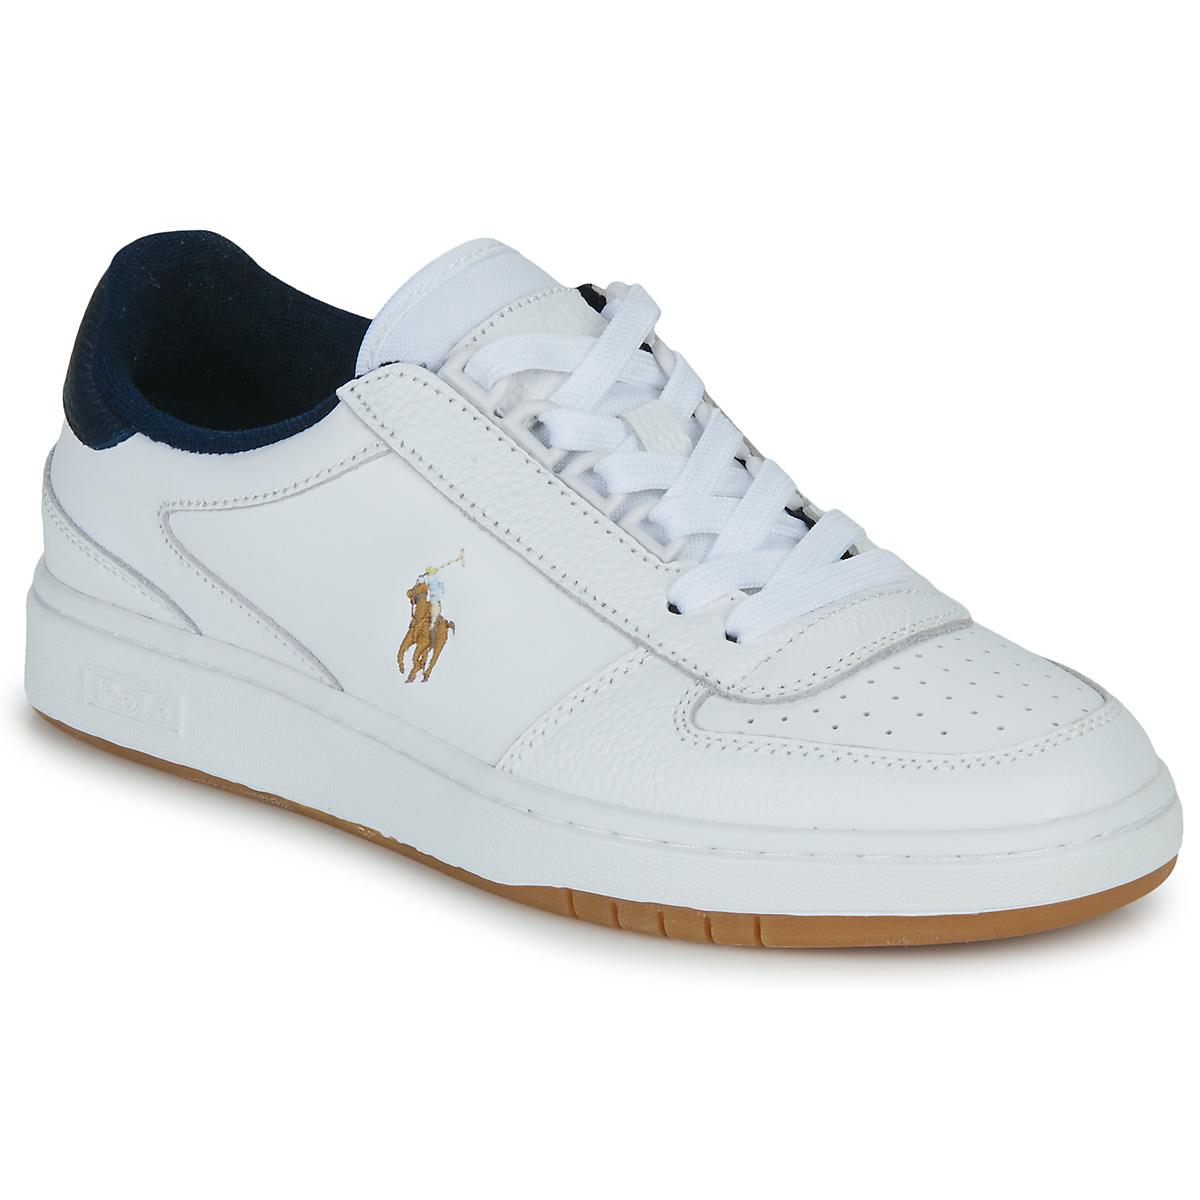 Sko Lave sneakers Polo Ralph Lauren POLO CRT PP-SNEAKERS-LOW TOP LACE Hvid / Marineblå